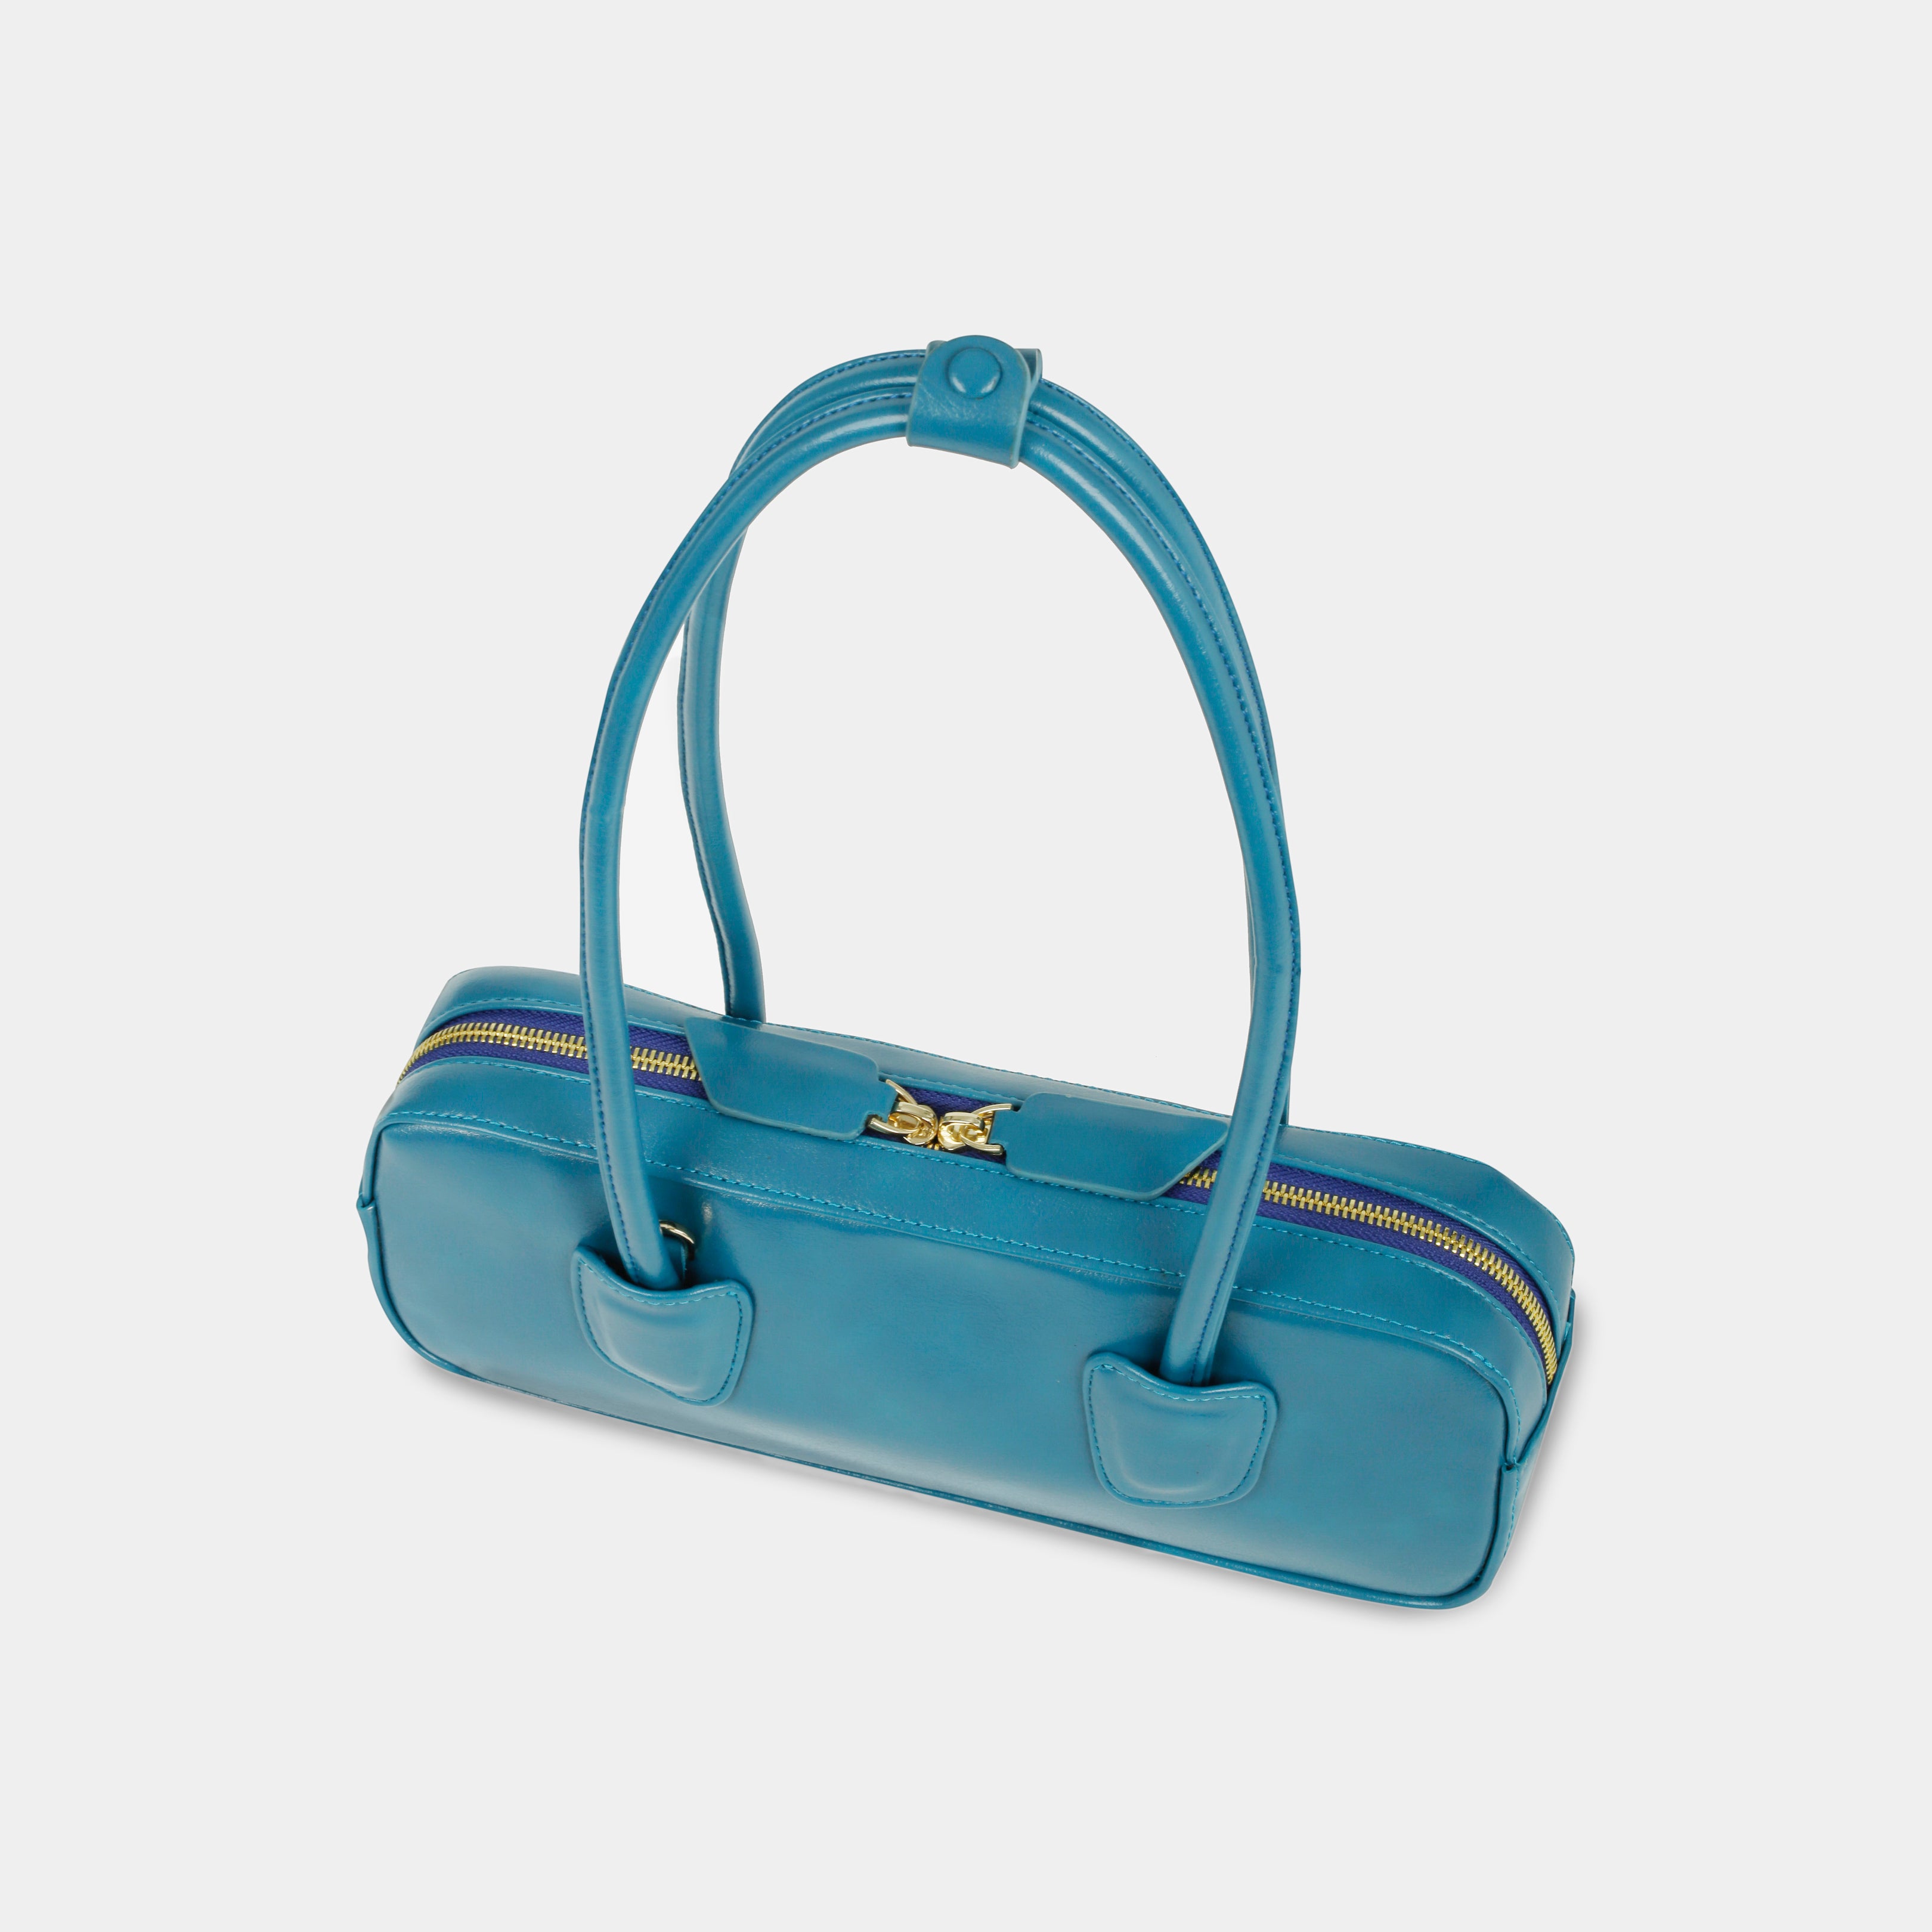 BREAKING bag in blue color